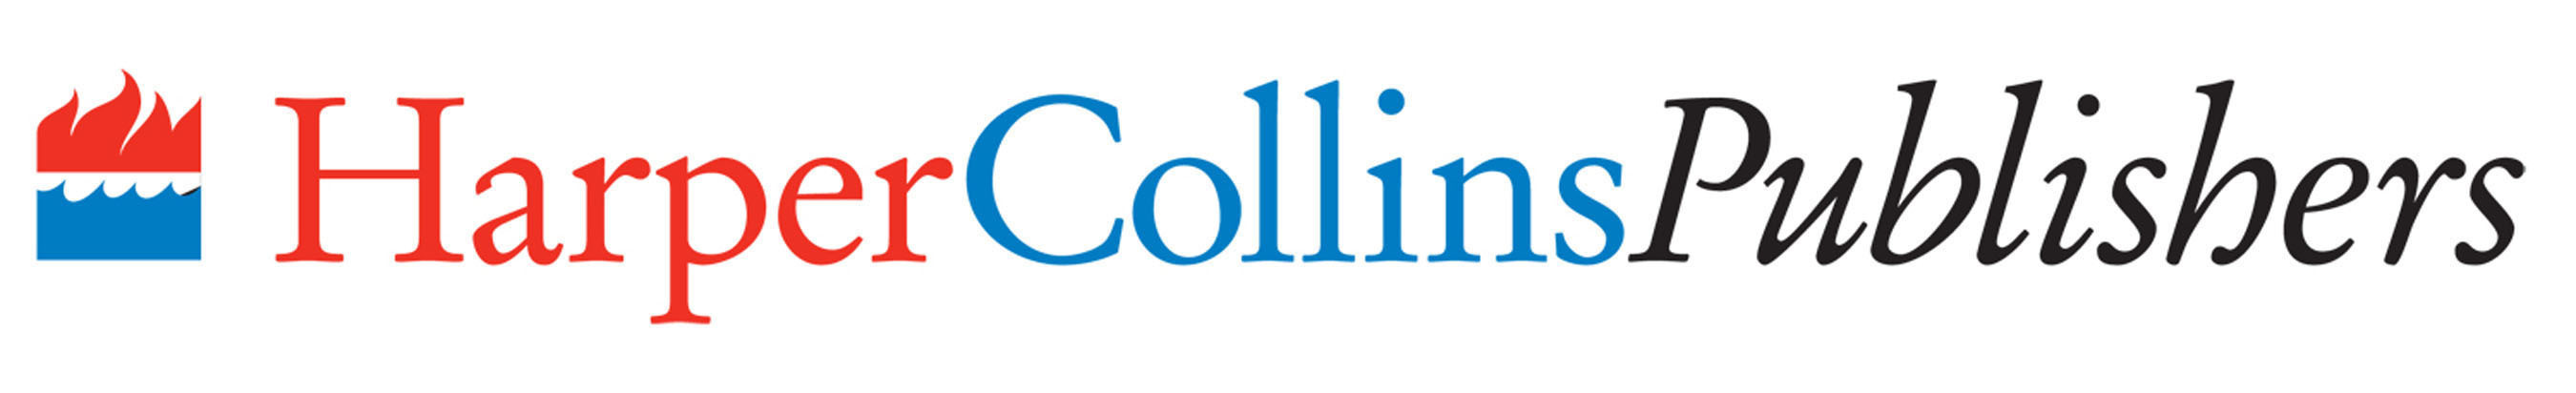 HarperCollins Publishers Logo. (PRNewsFoto/HarperCollins Publishers)